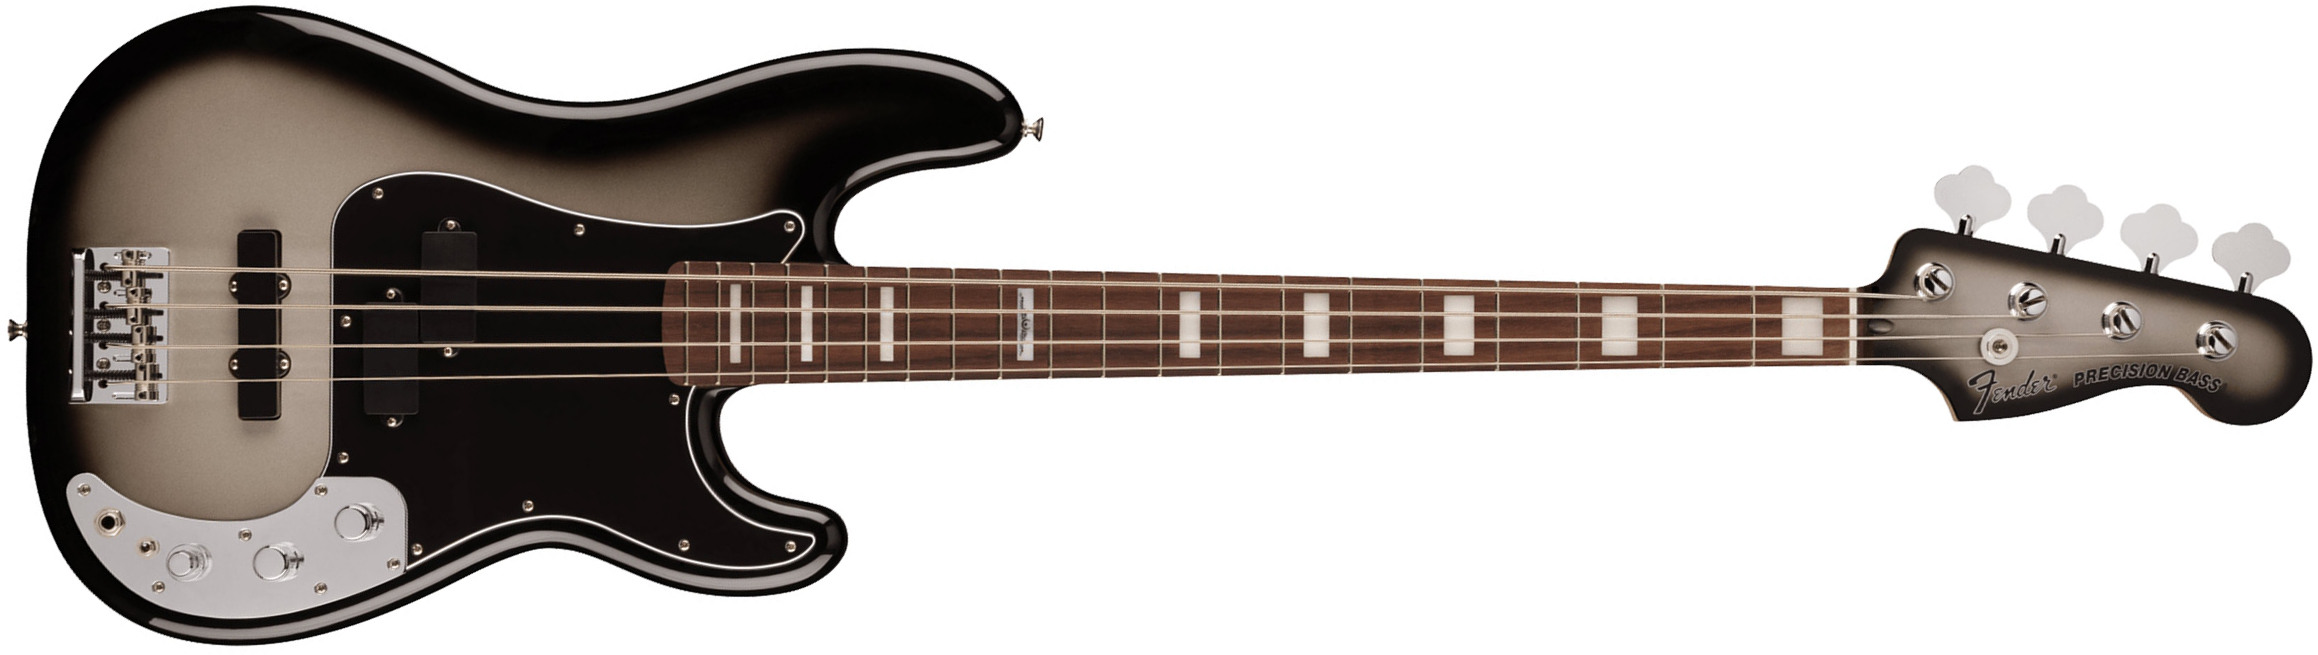 Fender Troy Sanders Precision Bass Signature Active Rw - Silverburst - Solid body elektrische bas - Main picture